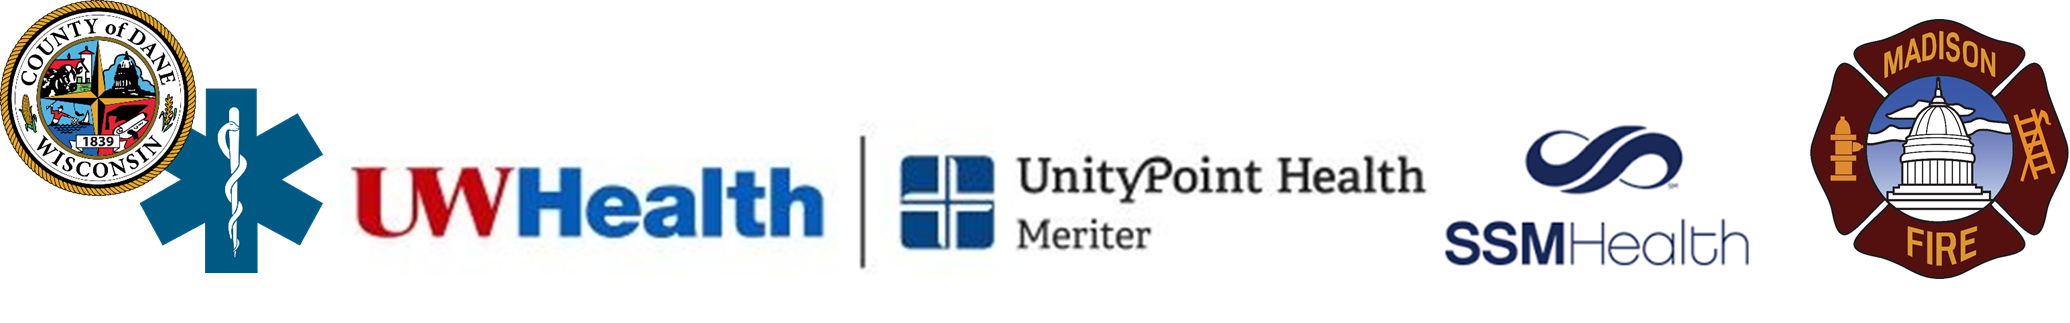 PulsePoint Community partners logos